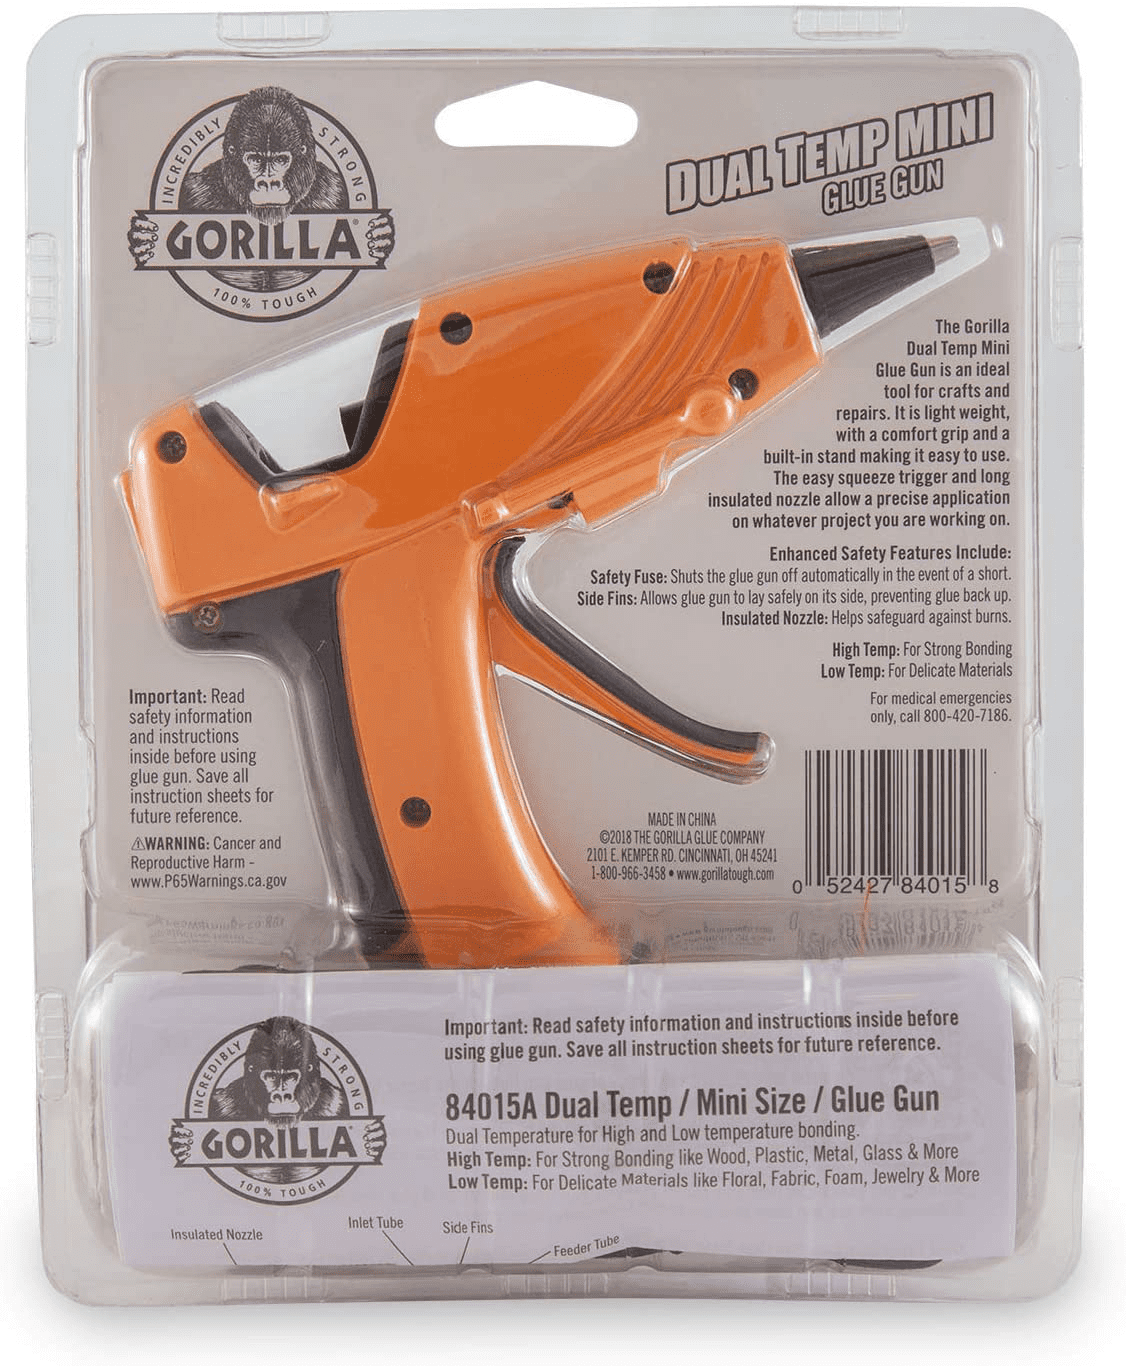  Gorilla Dual Temp Full-Size Hot Glue Gun Kit with 45 Hot Glue  Sticks : Everything Else